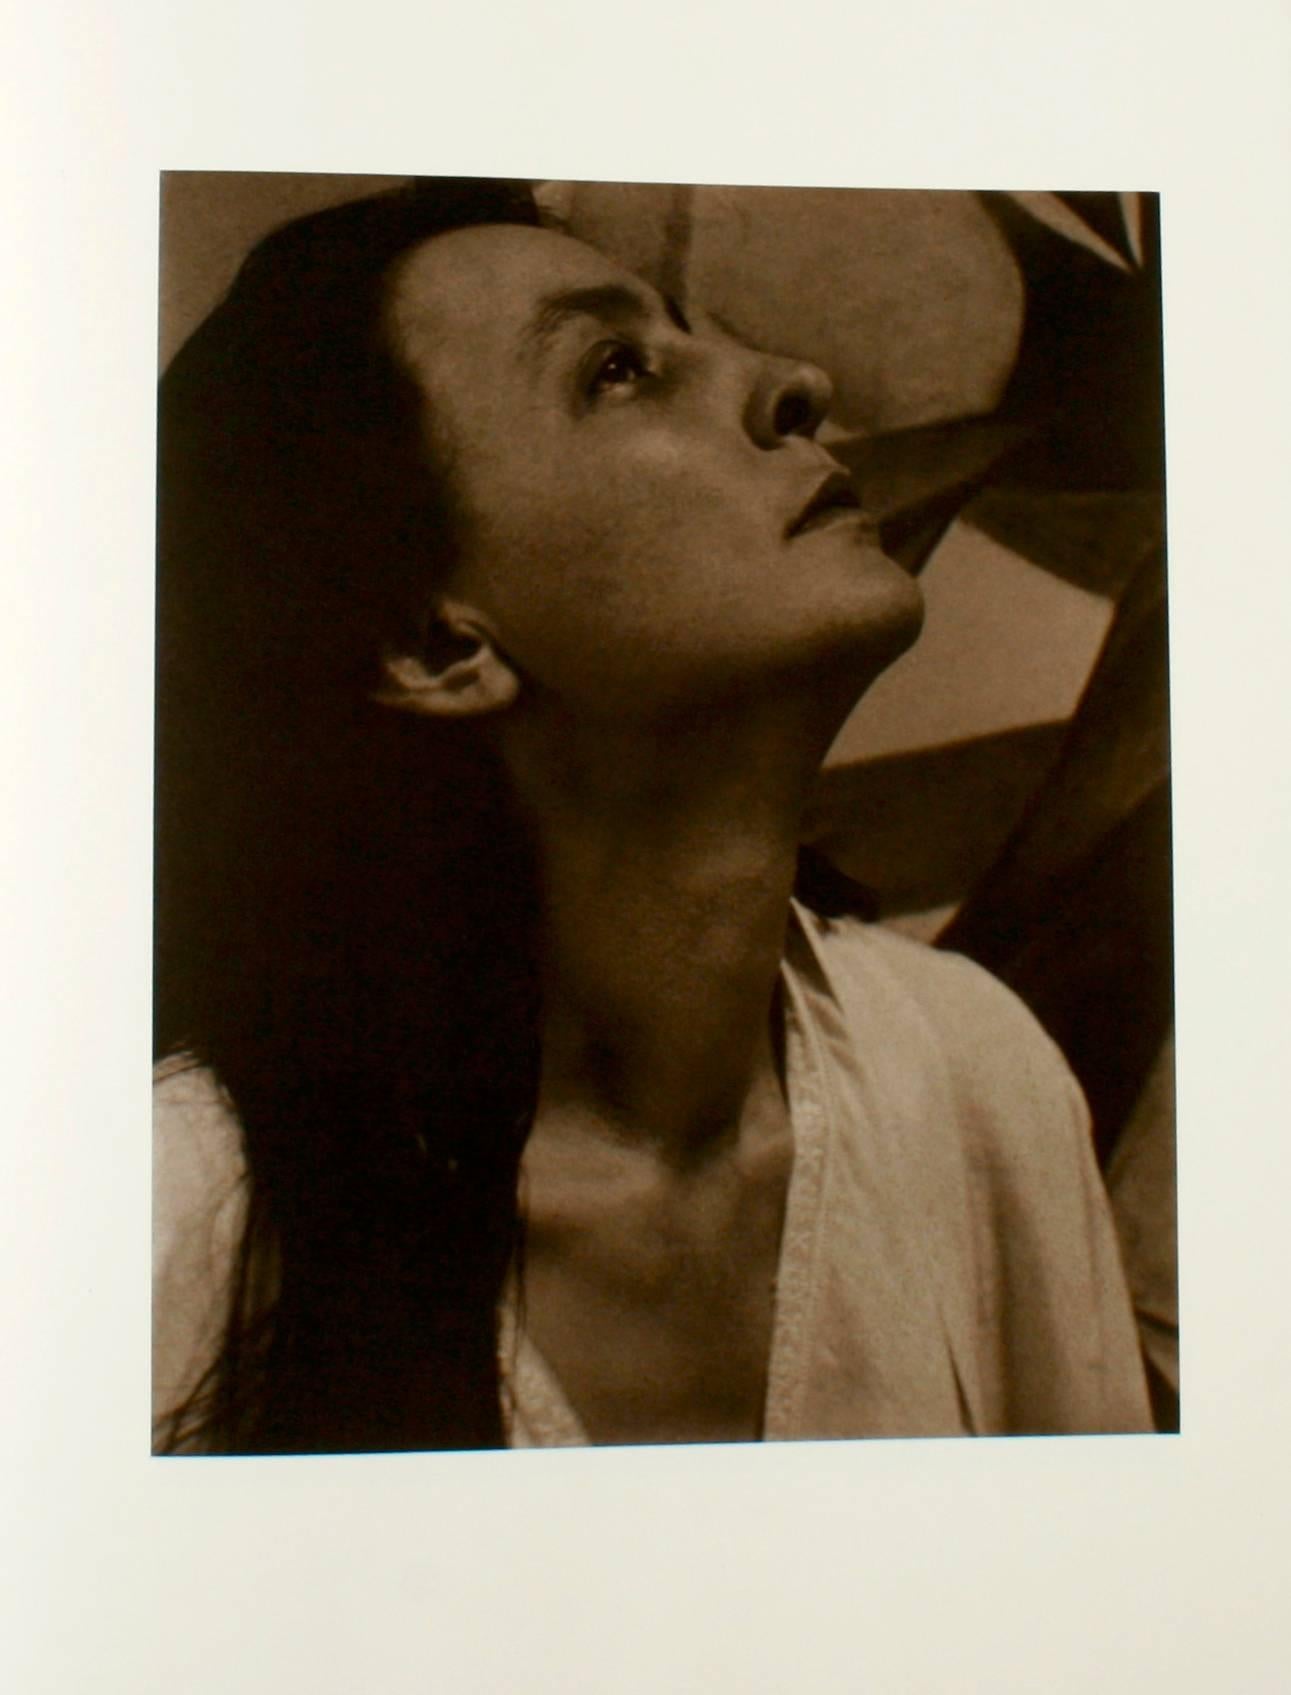 “Georgia O'Keeffe” A Portrait by Alfred Stieglitz and Georgia O'Keeffe 1